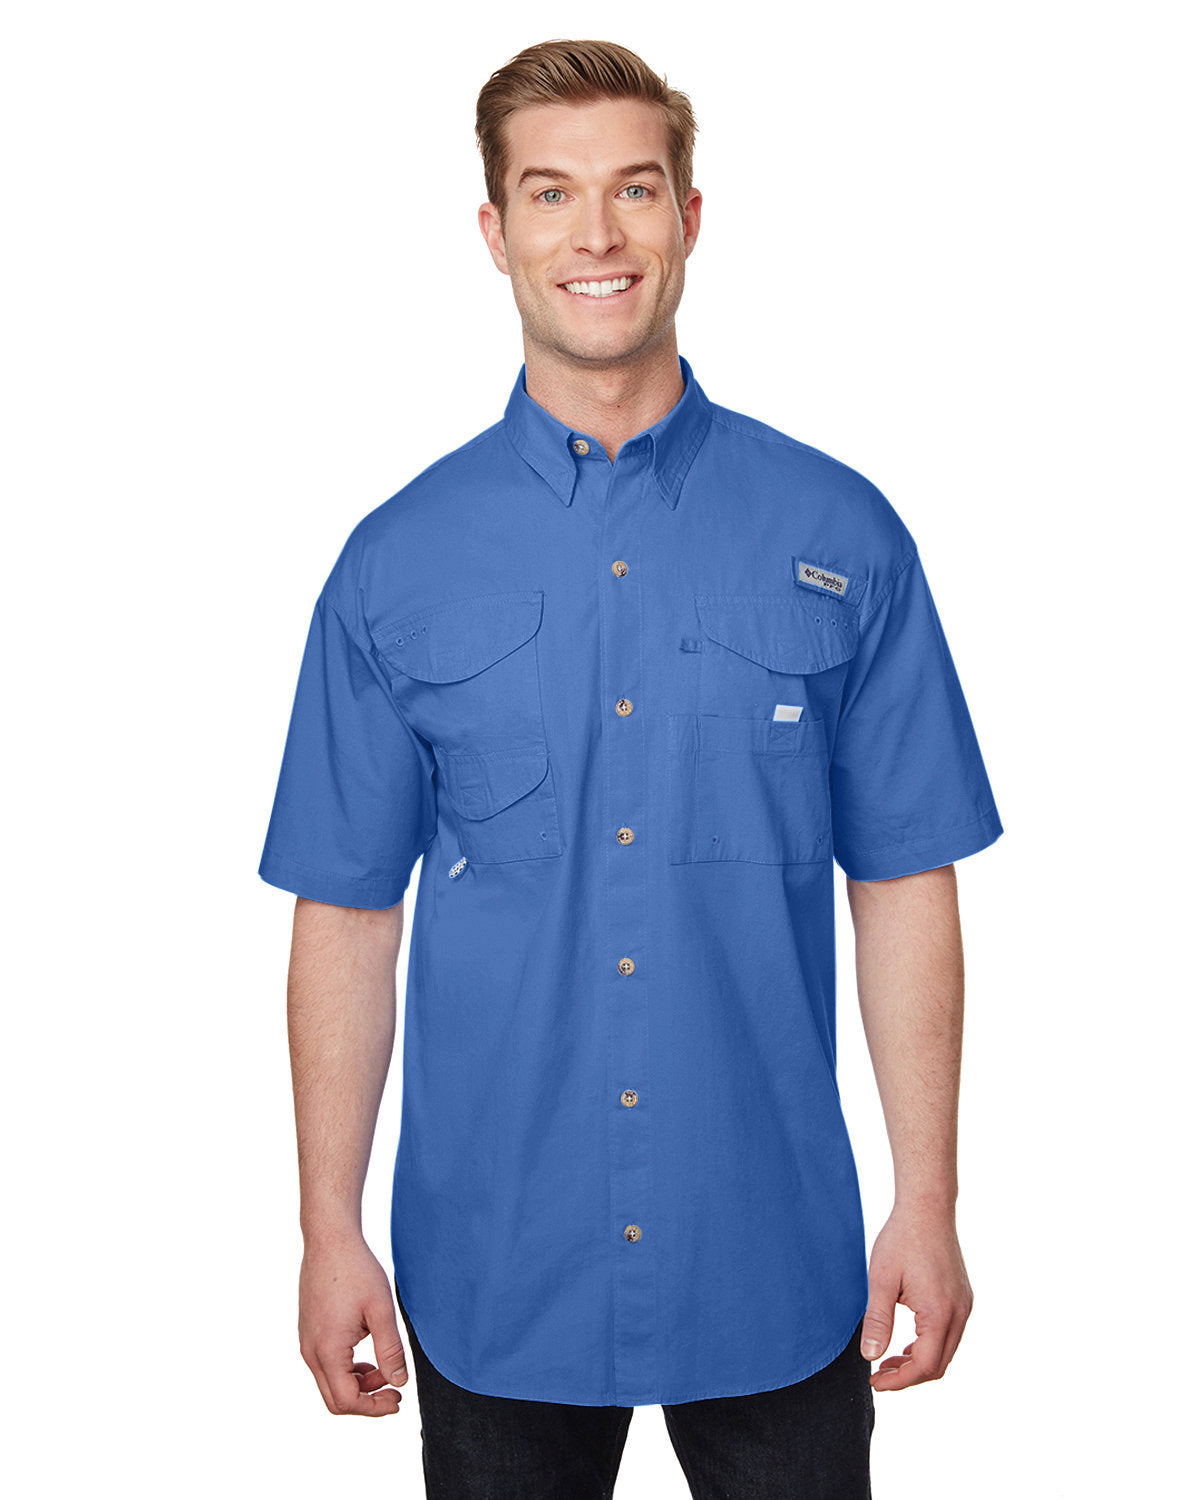 Columbia 7130 - Men's Bonehead Short-Sleeve Shirt Vivid Blue - L